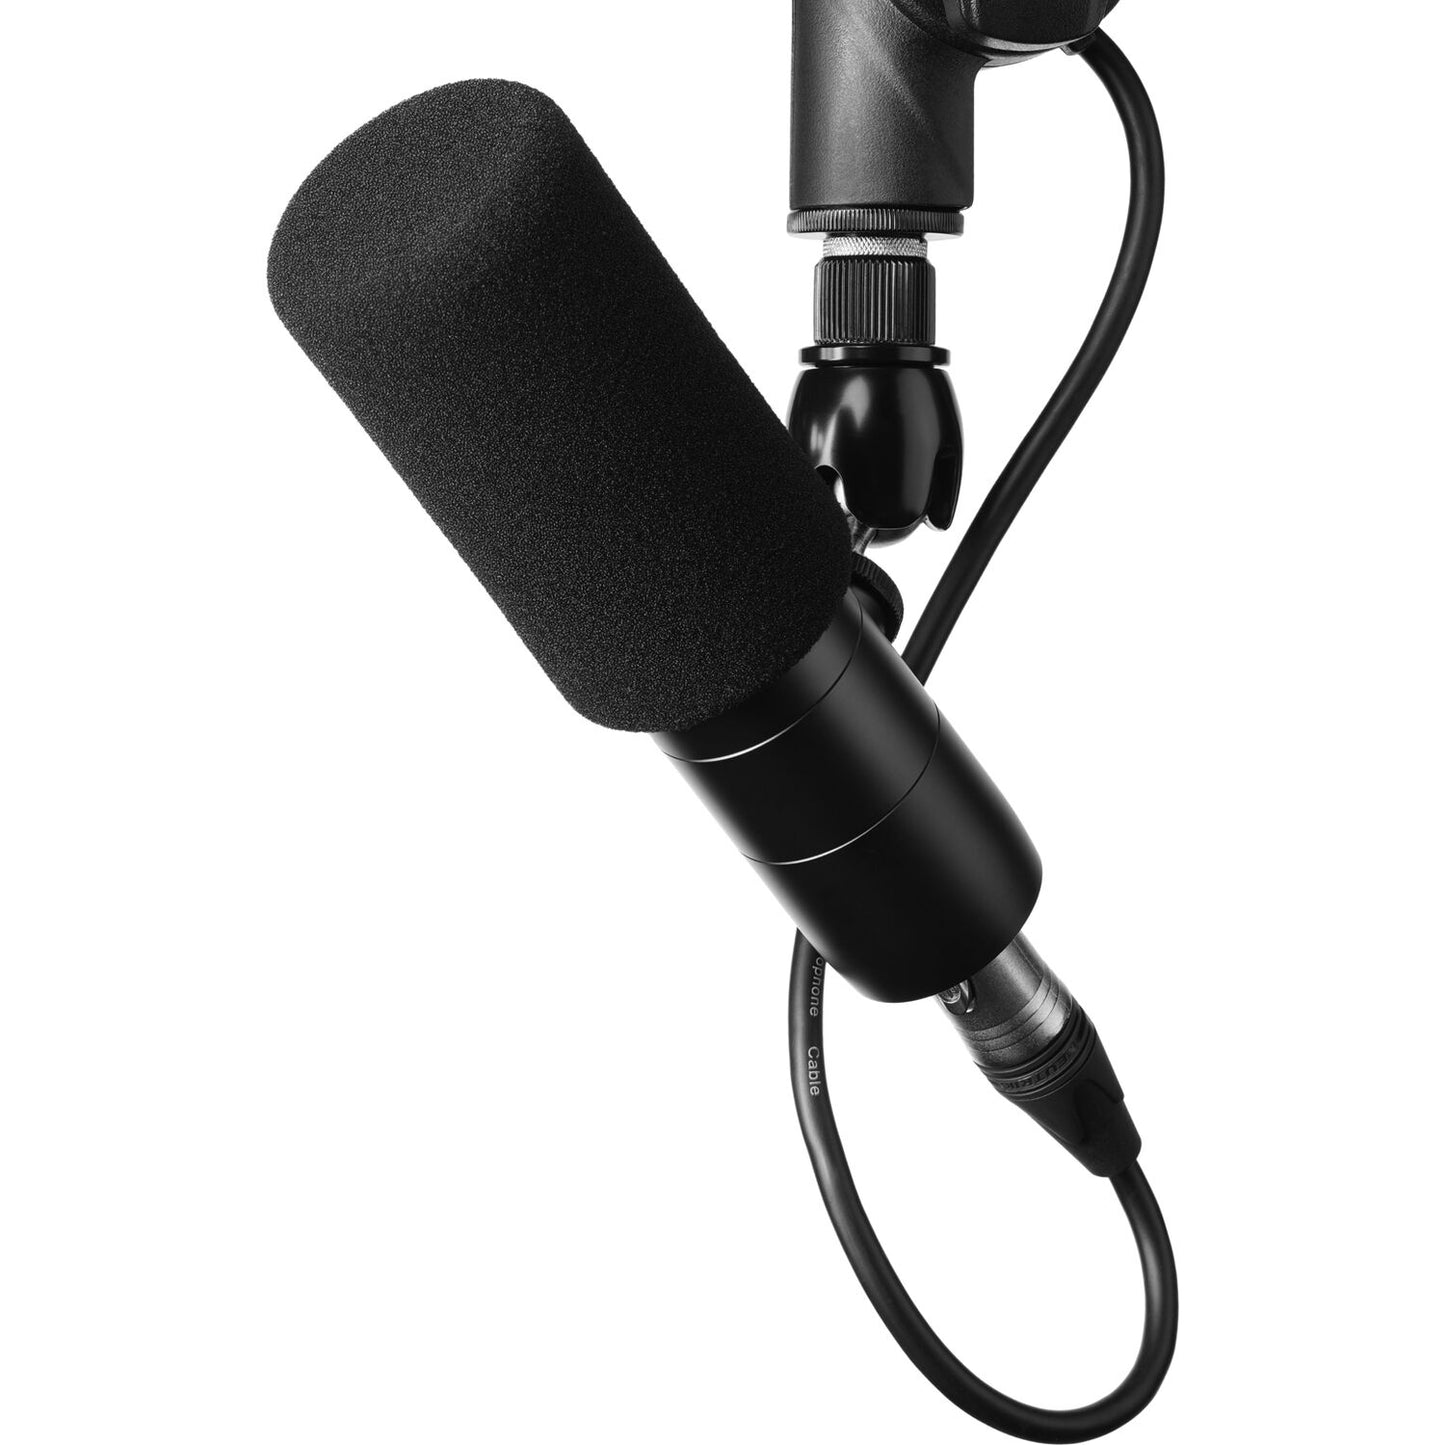 Earthworks Ethos Broadcasting Condenser Microphone Black